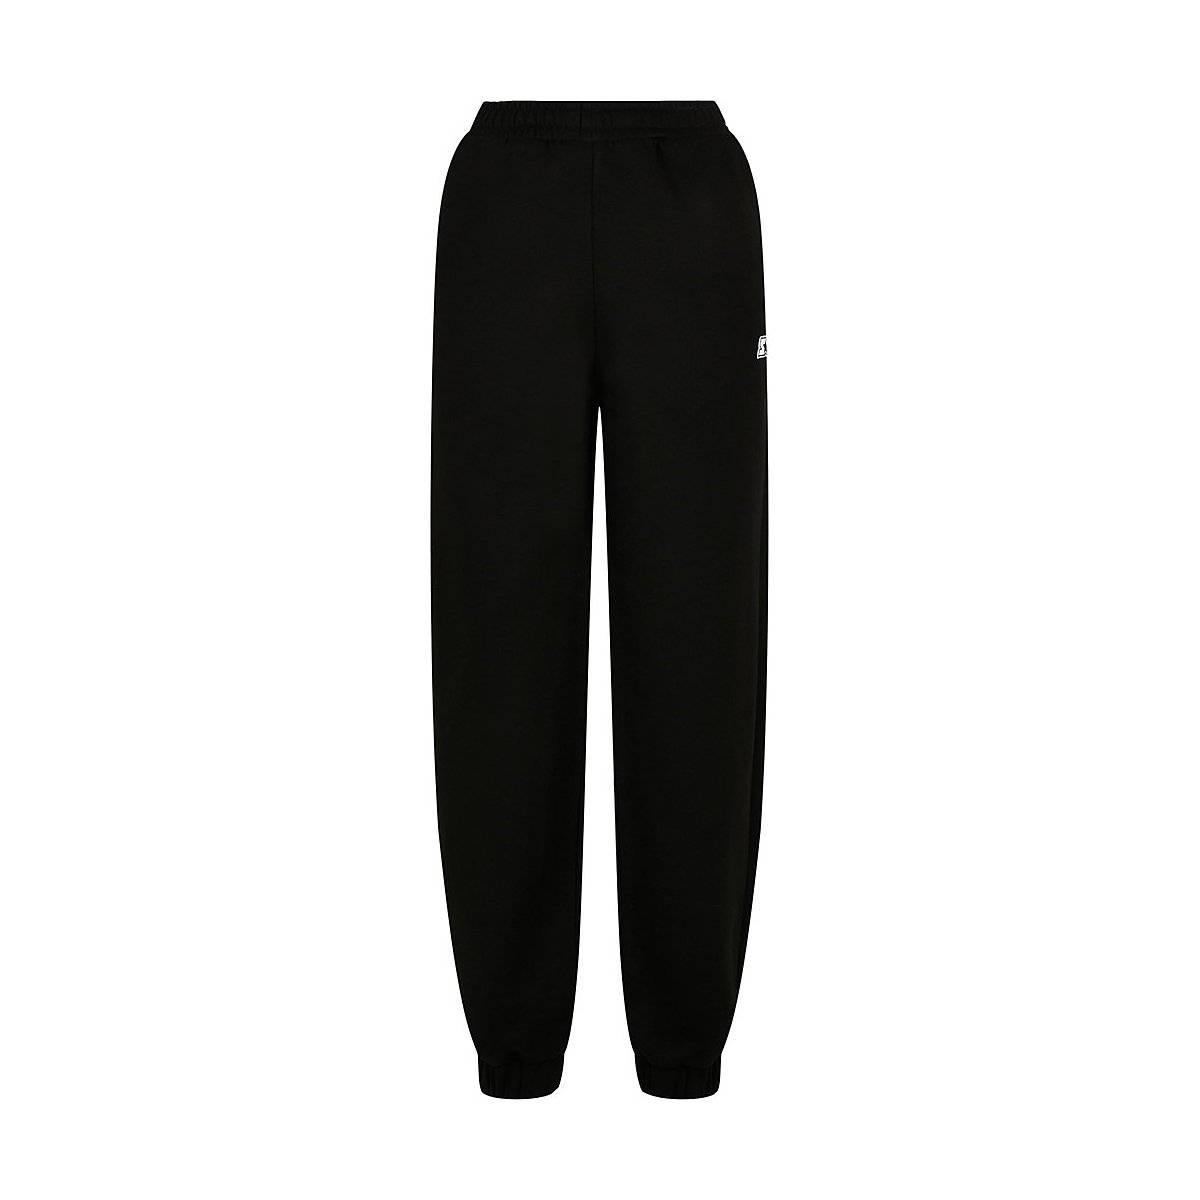 STARTER® BLACK LABEL Starter Black Label Damen Ladies Essential Sweat Pants Black schwarz